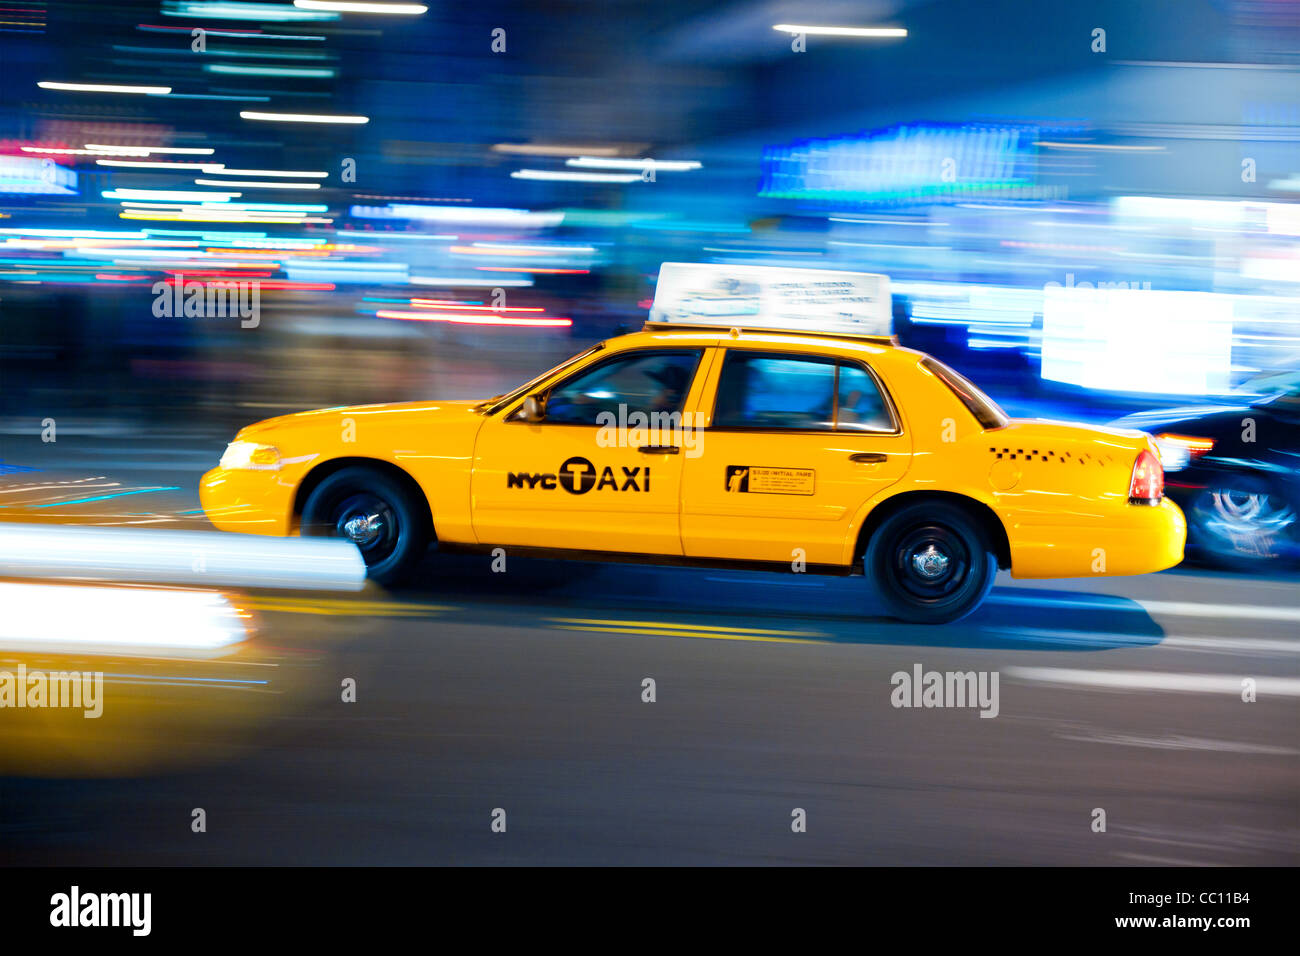 Yellow Cab à rue. Taxi, Manhattan, New York, USA. Chauffeur de taxi de New York va vite. Banque D'Images